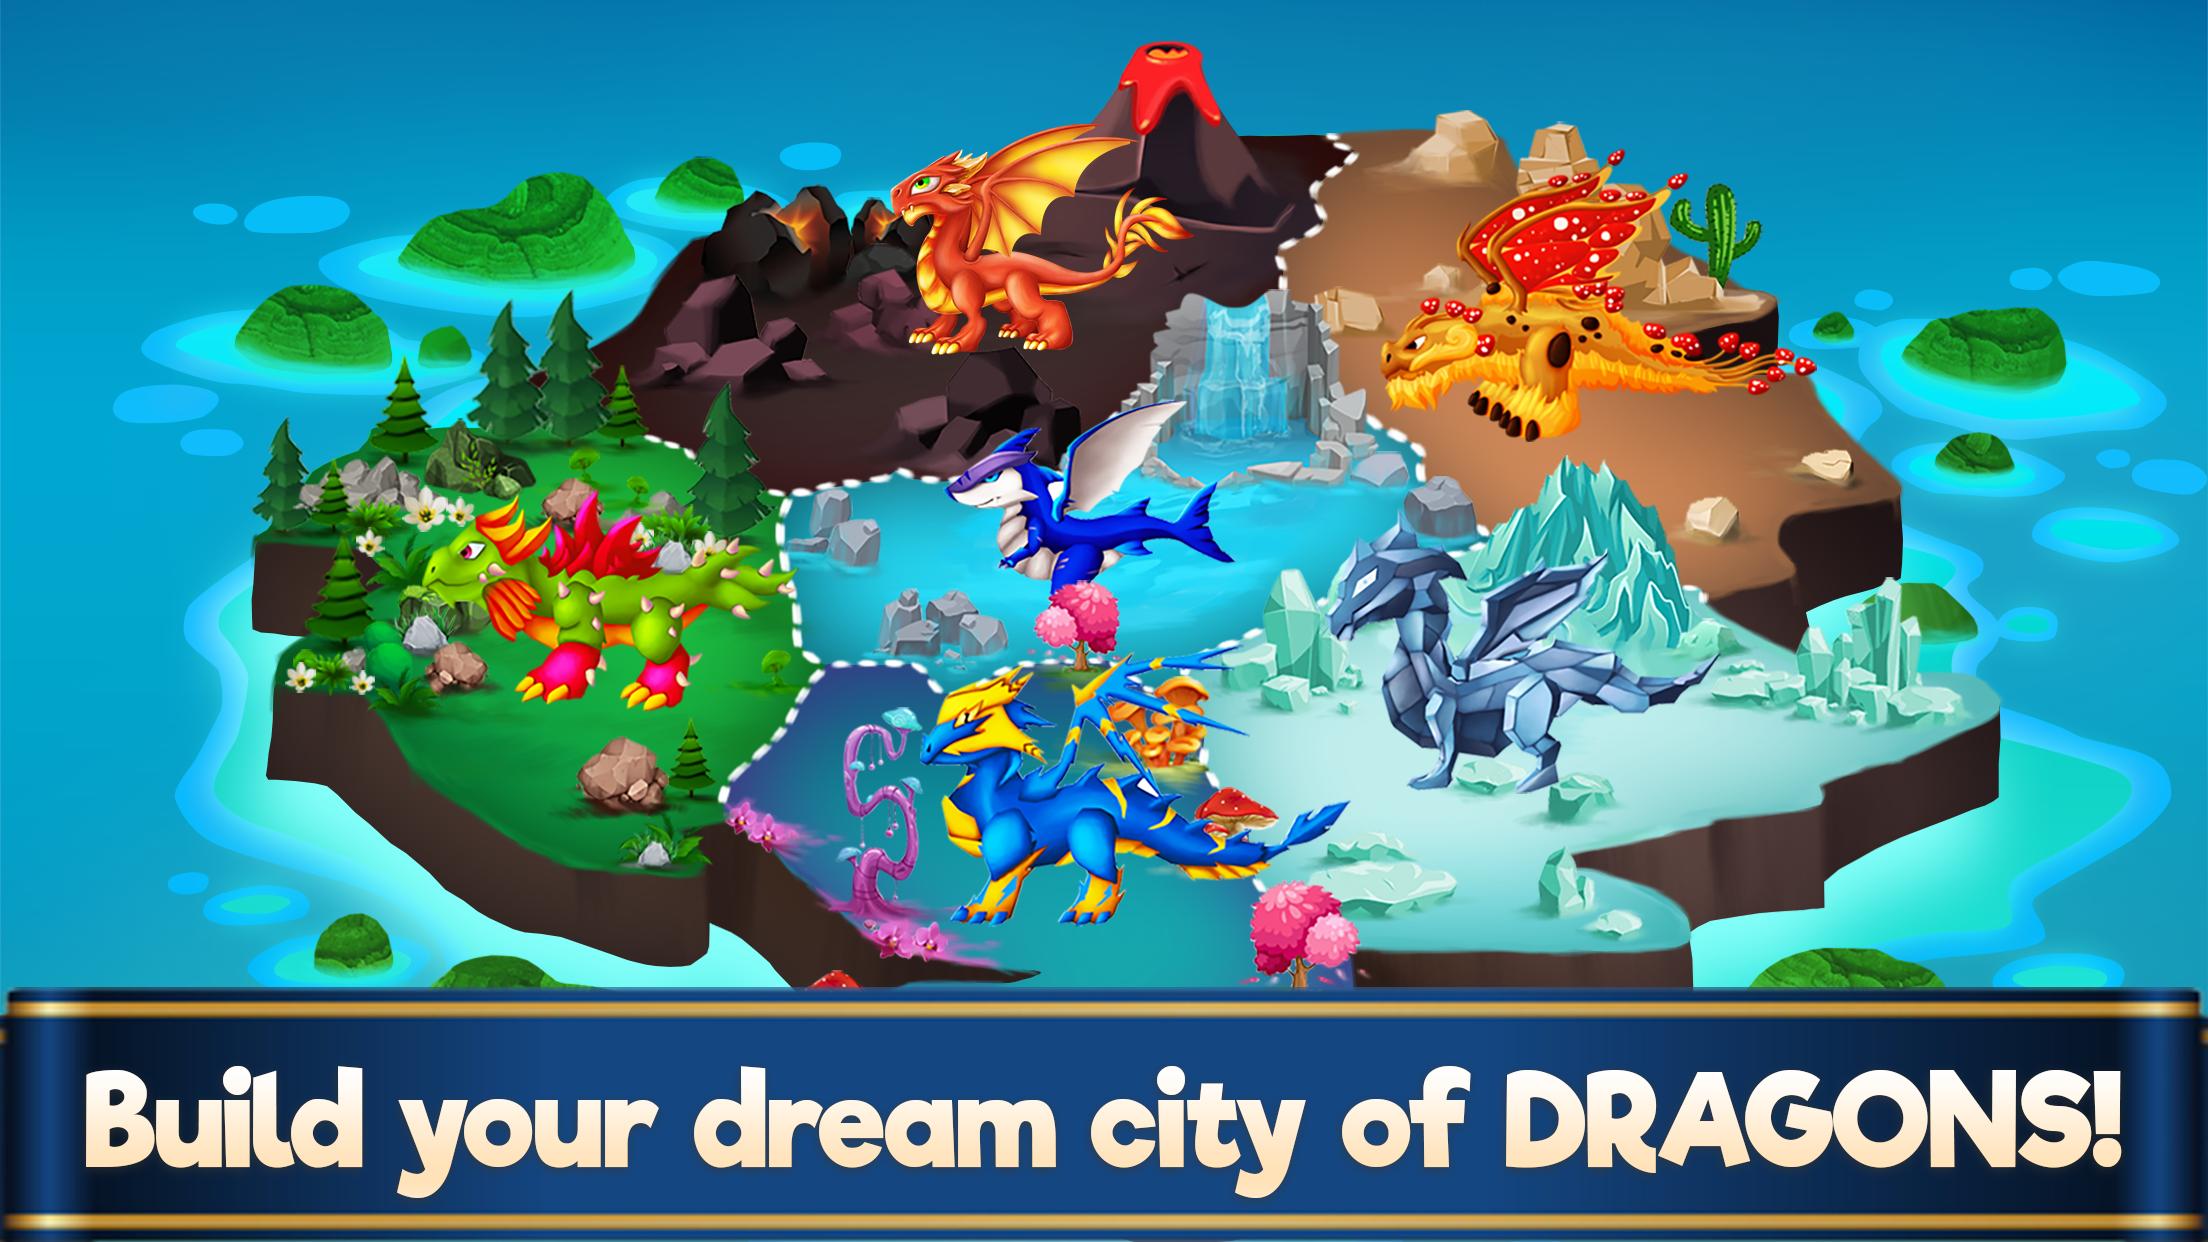 Игра выращивание драконов. Dragon Paradise City. Игра про выращивание драконов. Игра по выращиванию драконов в 2016 году. Игра про выращивание драконов на андроид.